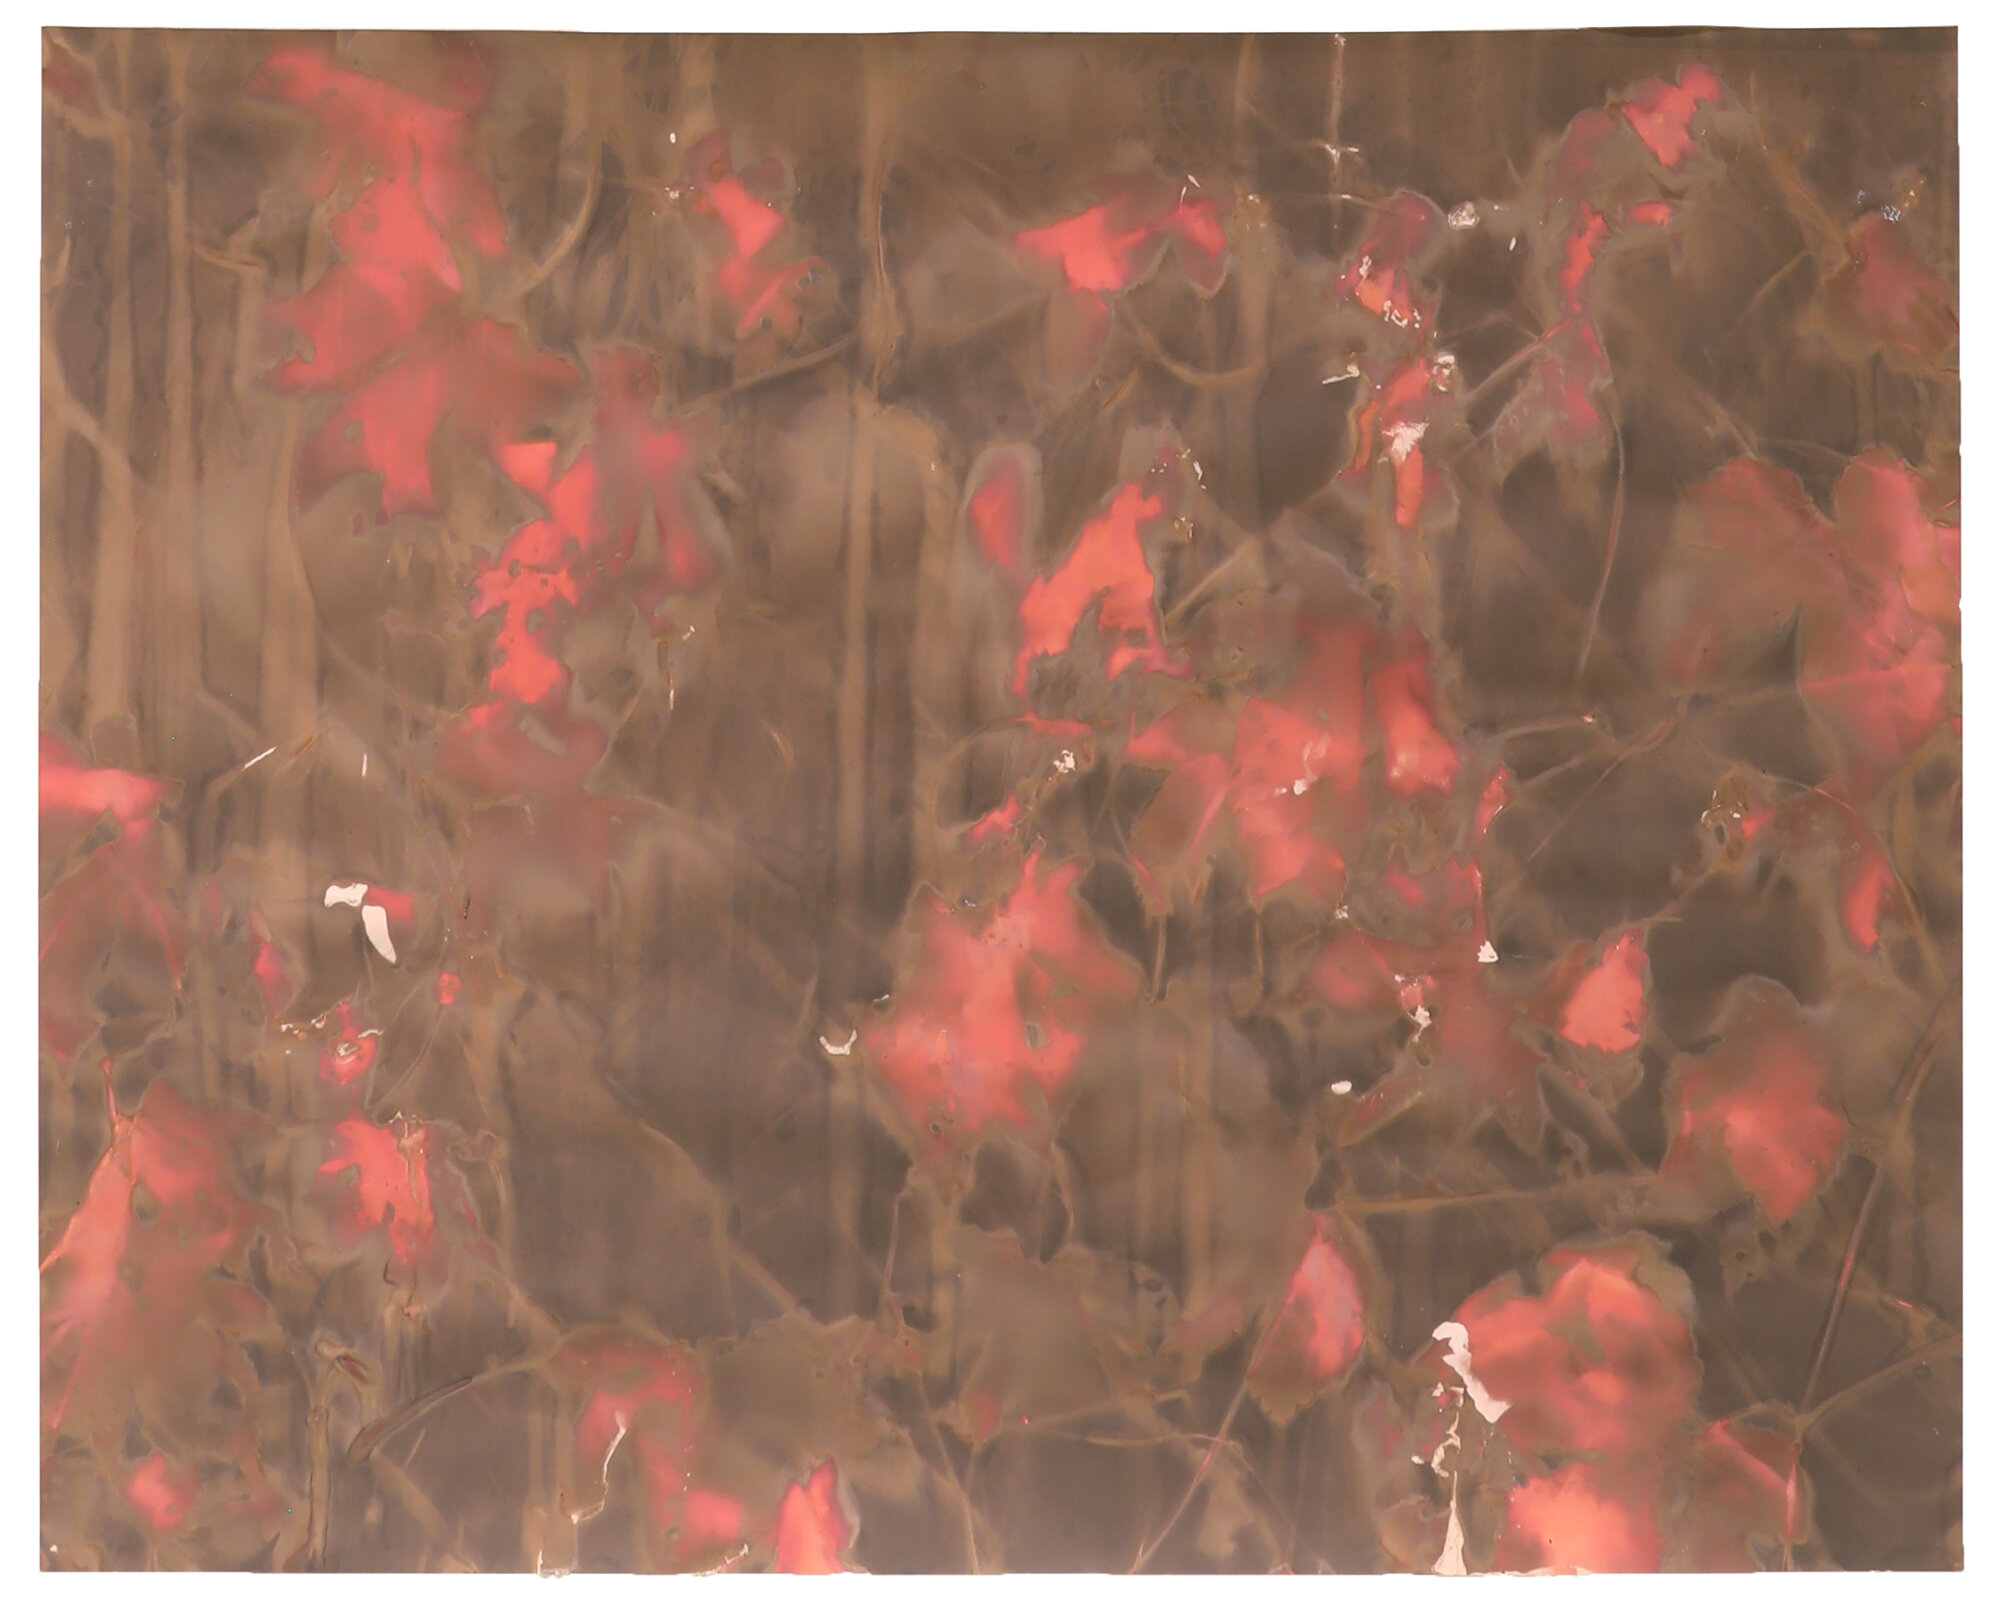  red hook fence #11     king st  16” x 20”  lumen print 